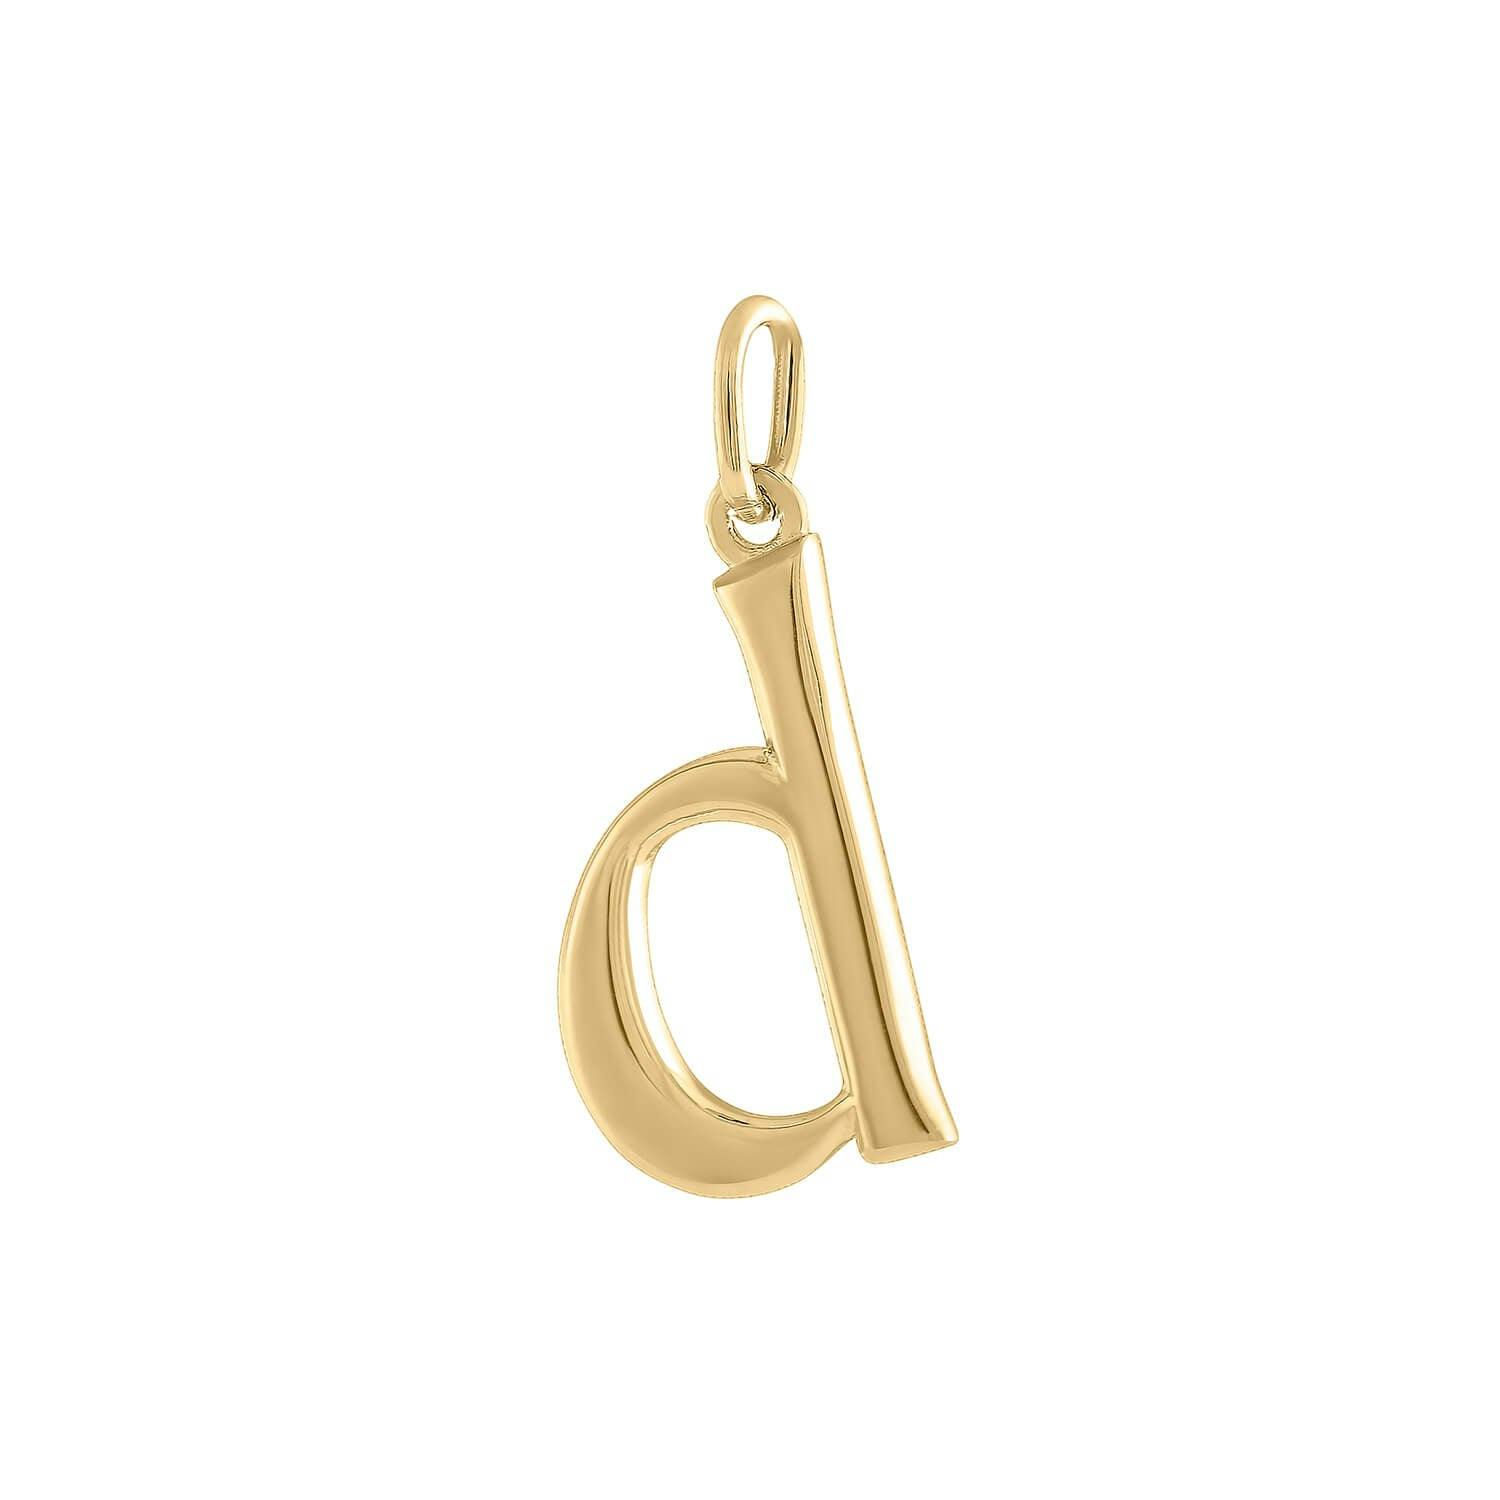 Initial Charm "D" in Gold Vermeil